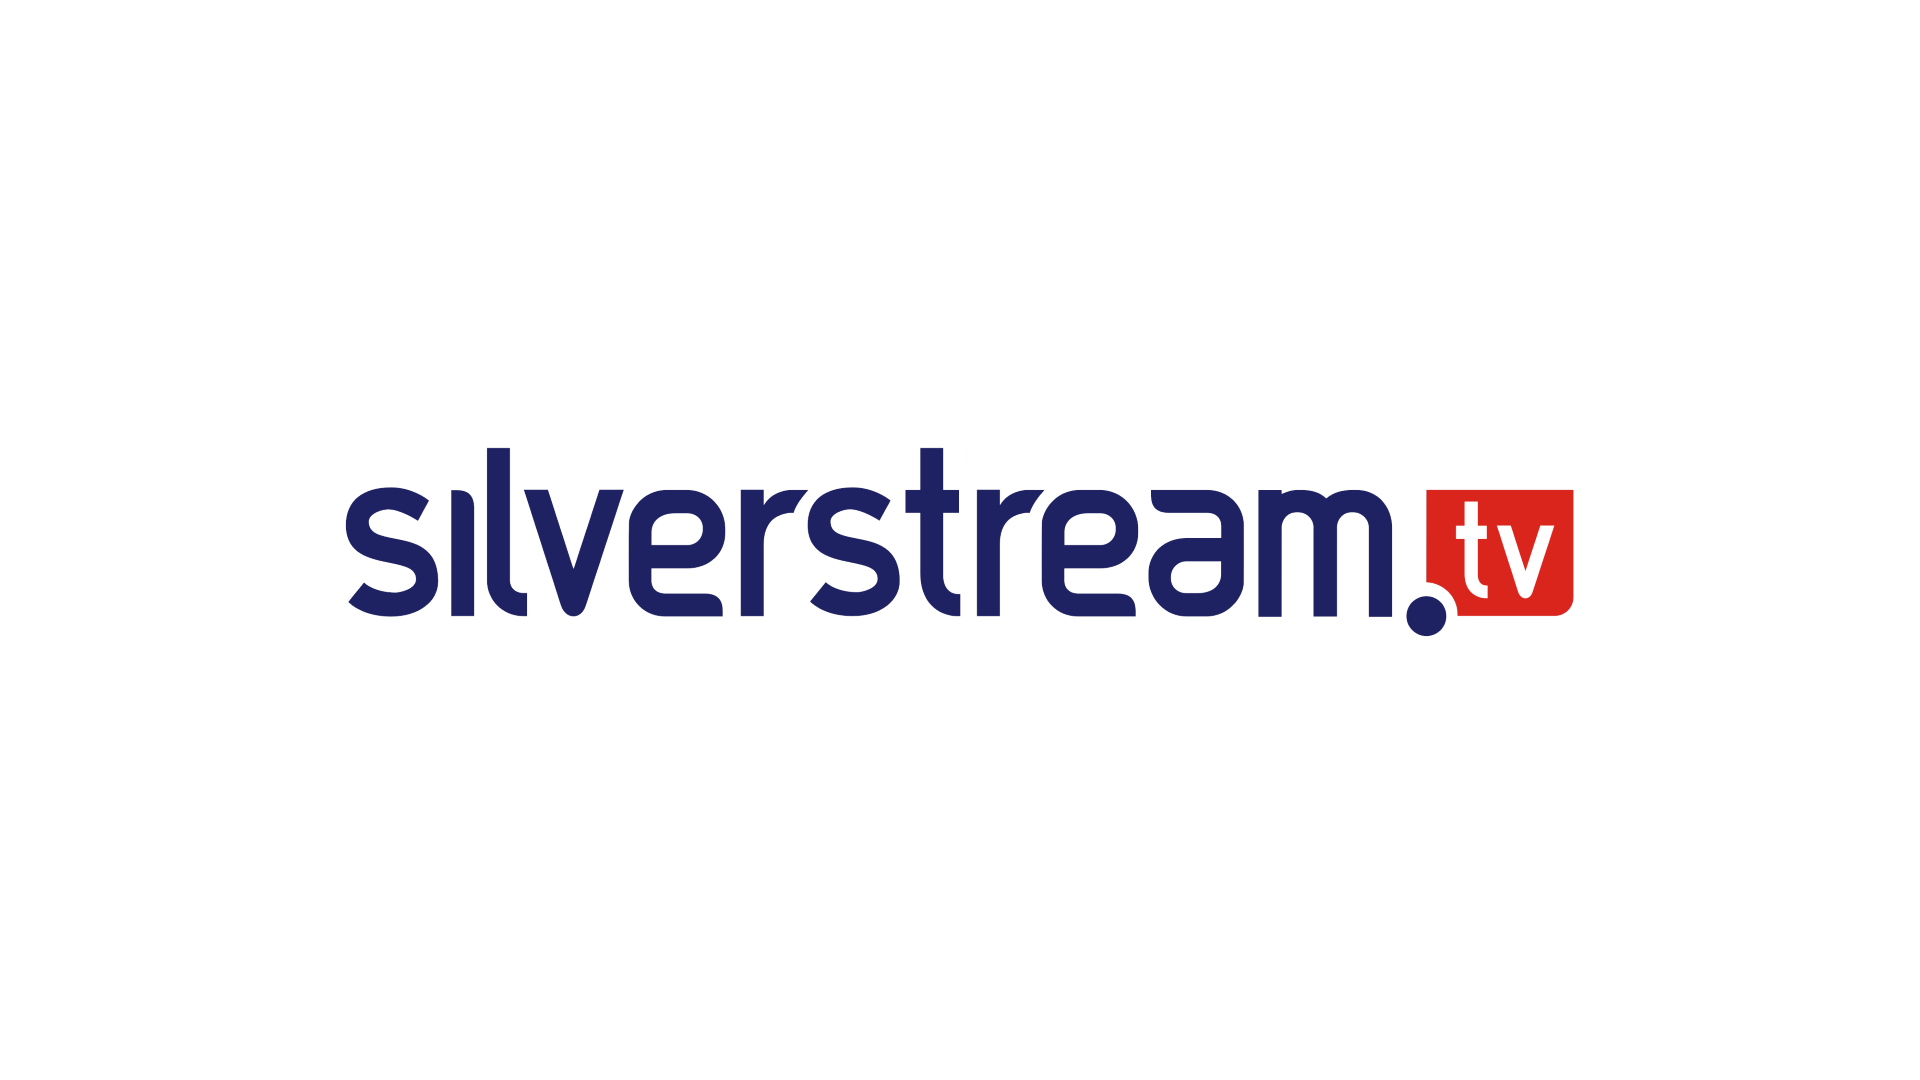 Silverstream.tv